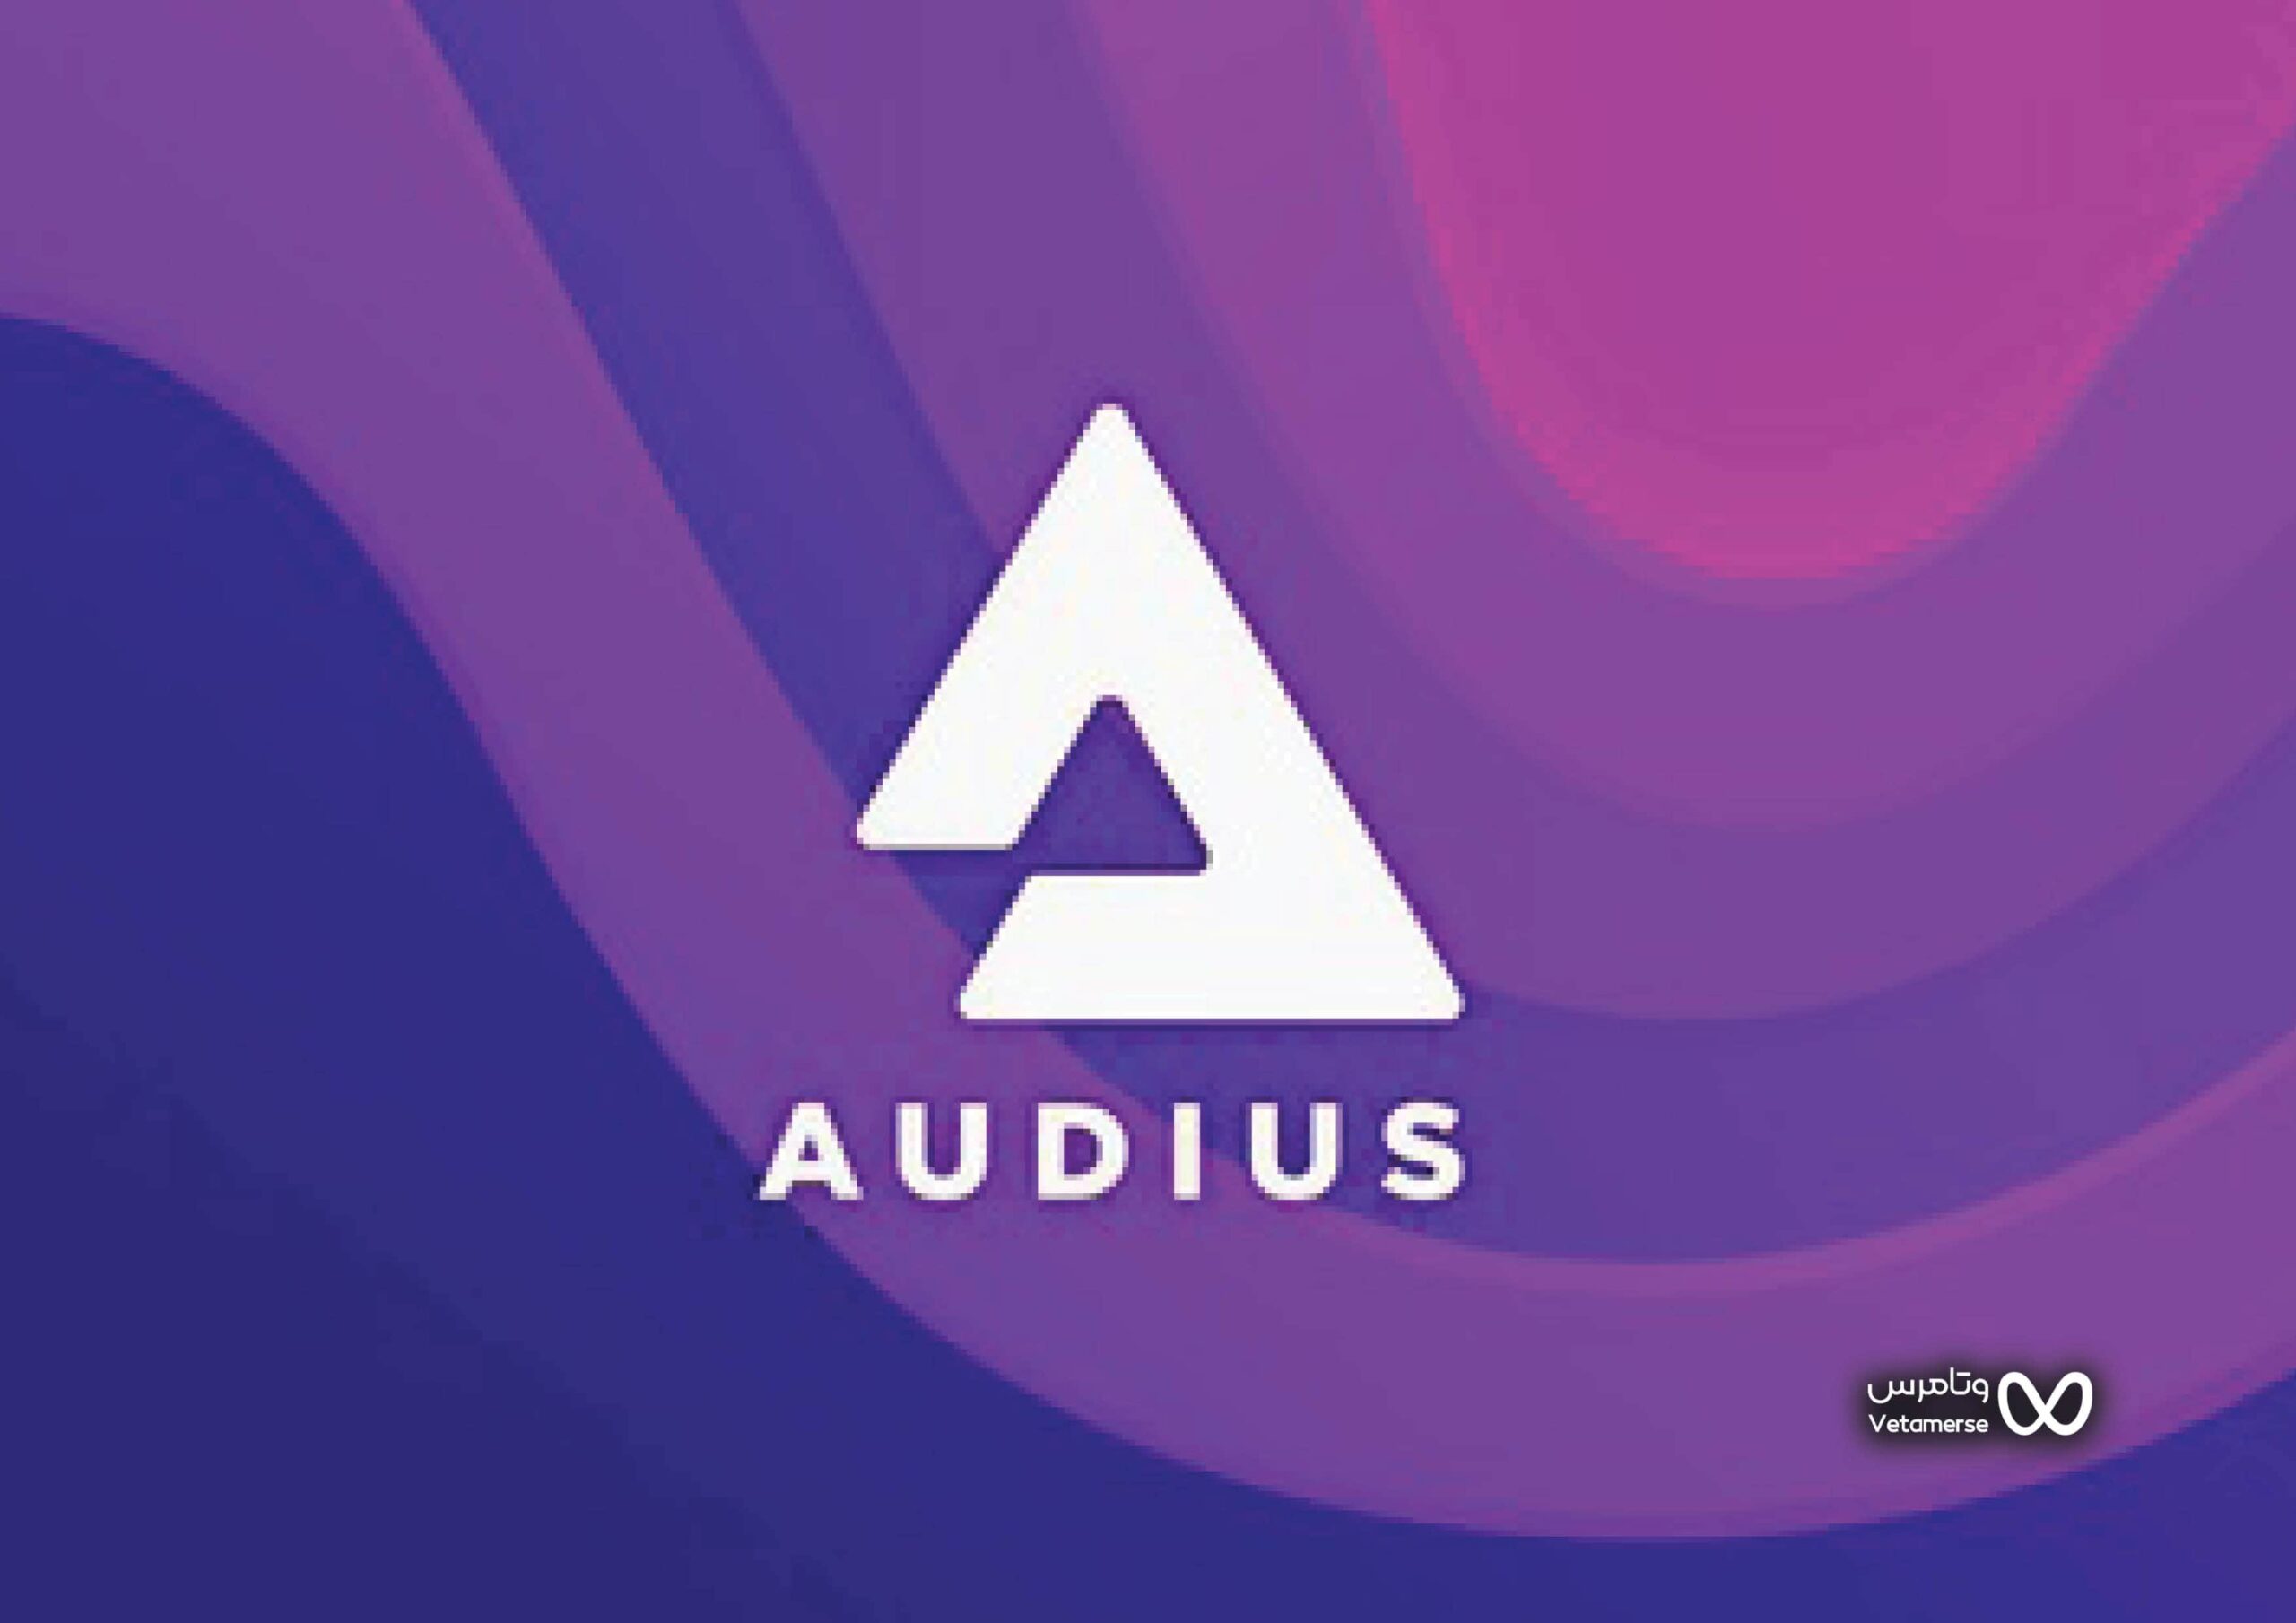 اودیوس (Audius) چیست؟